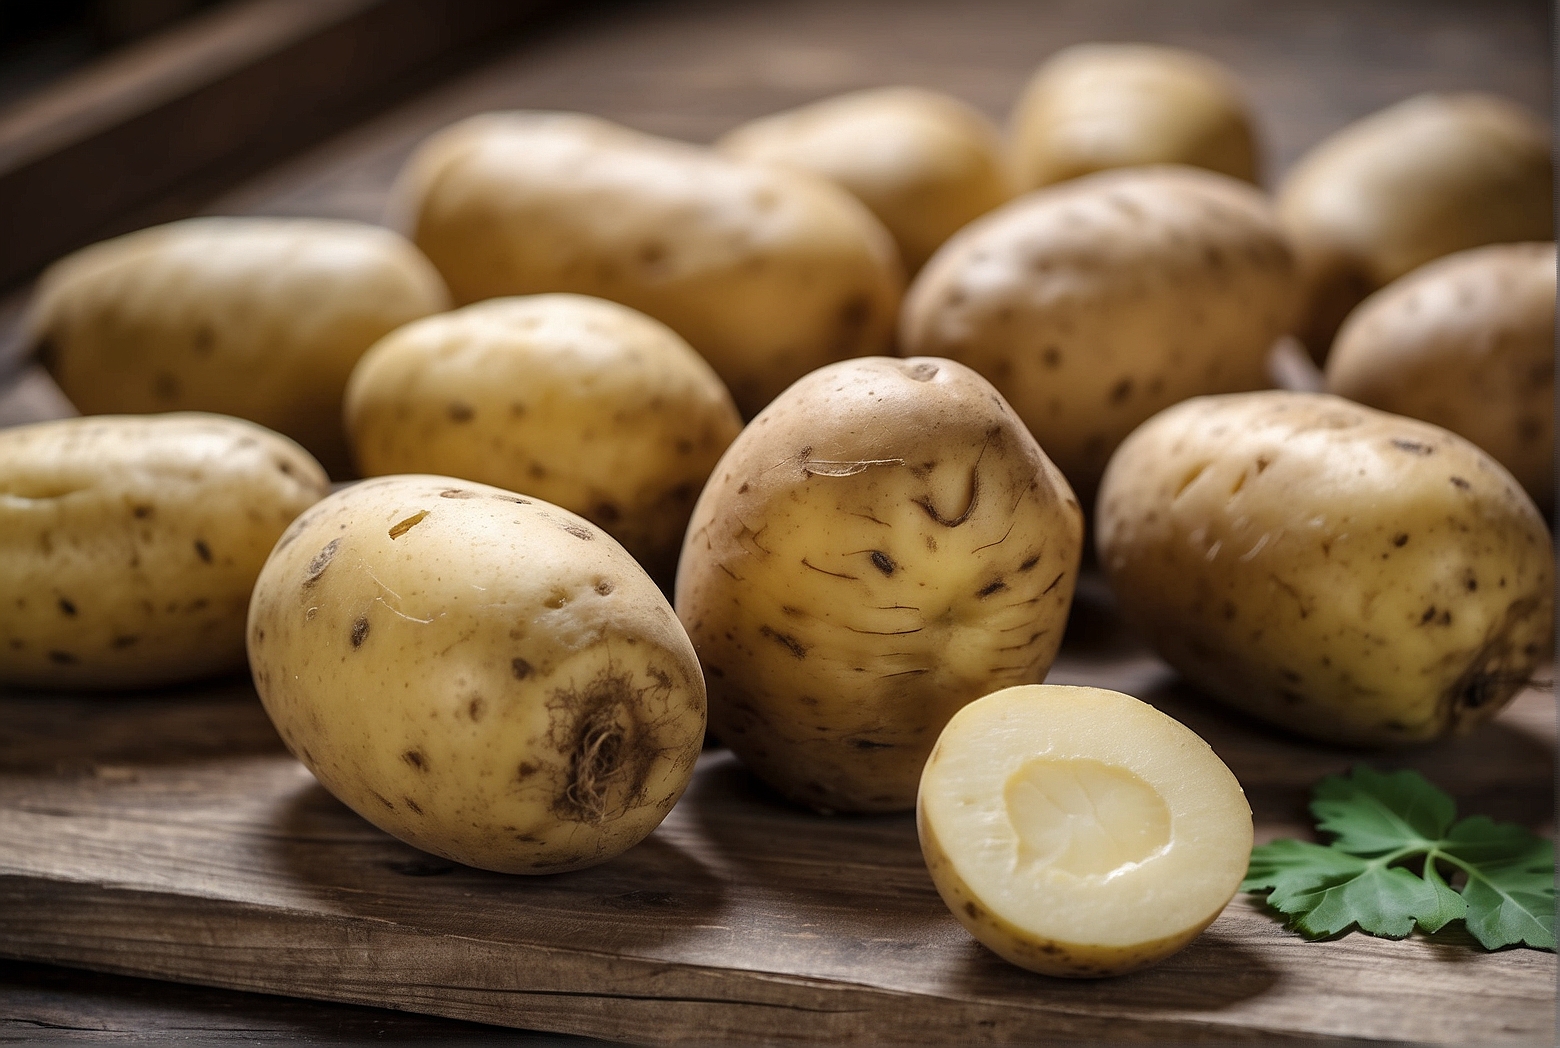 Default Are russet potatoes GMO 0